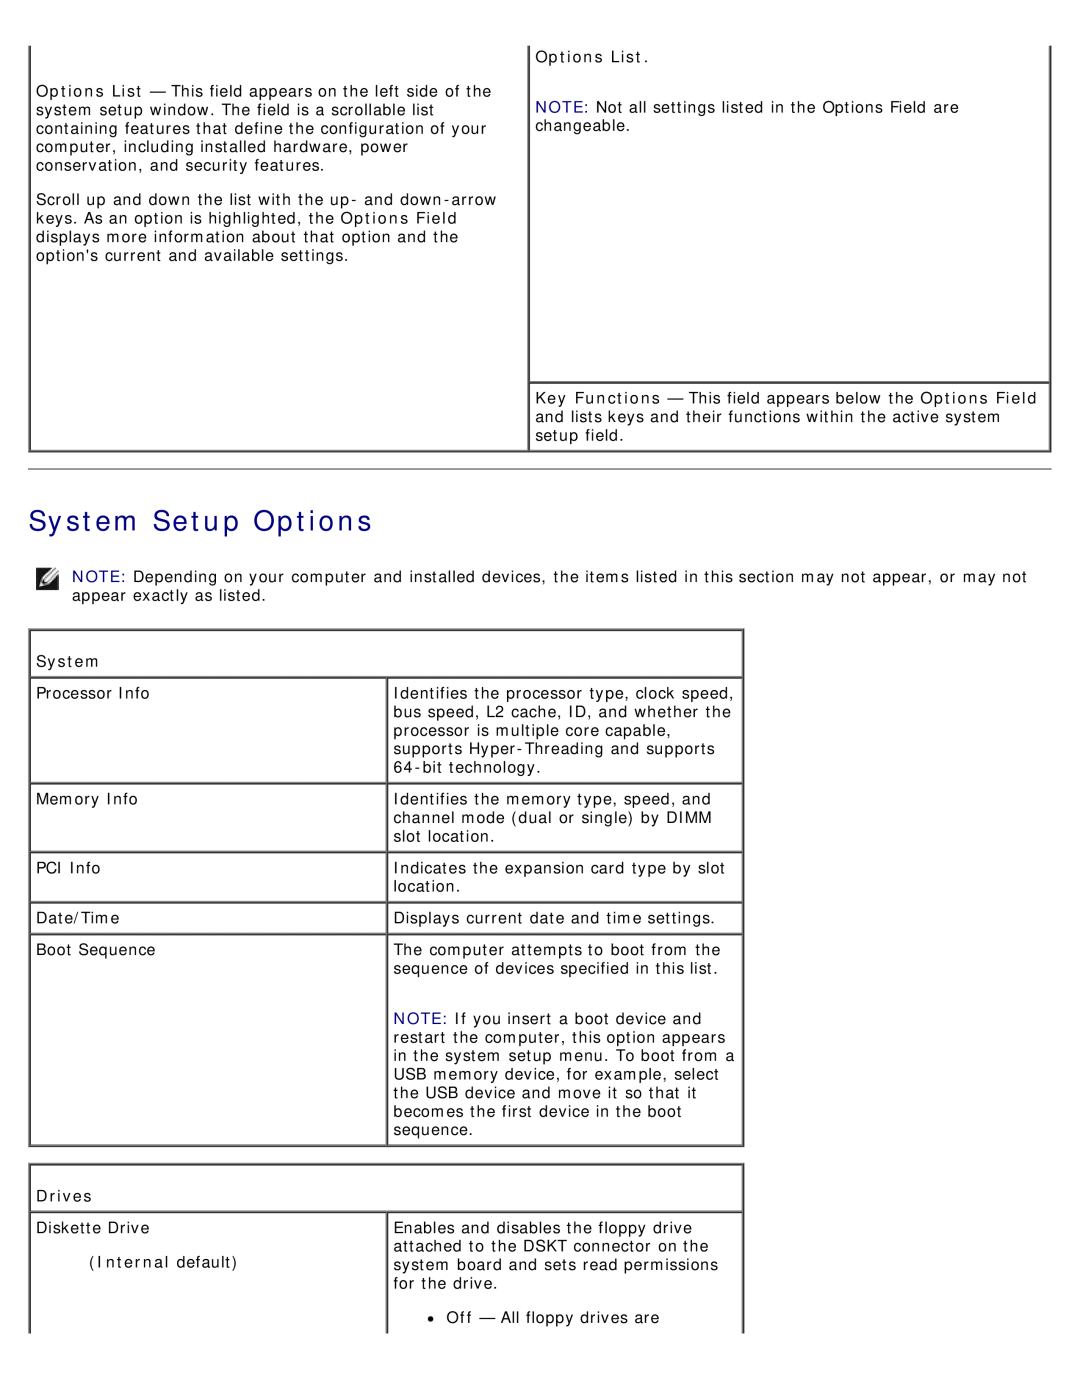 Dell DCDO, 710 H2C service manual System Setup Options, Options List, Drives 